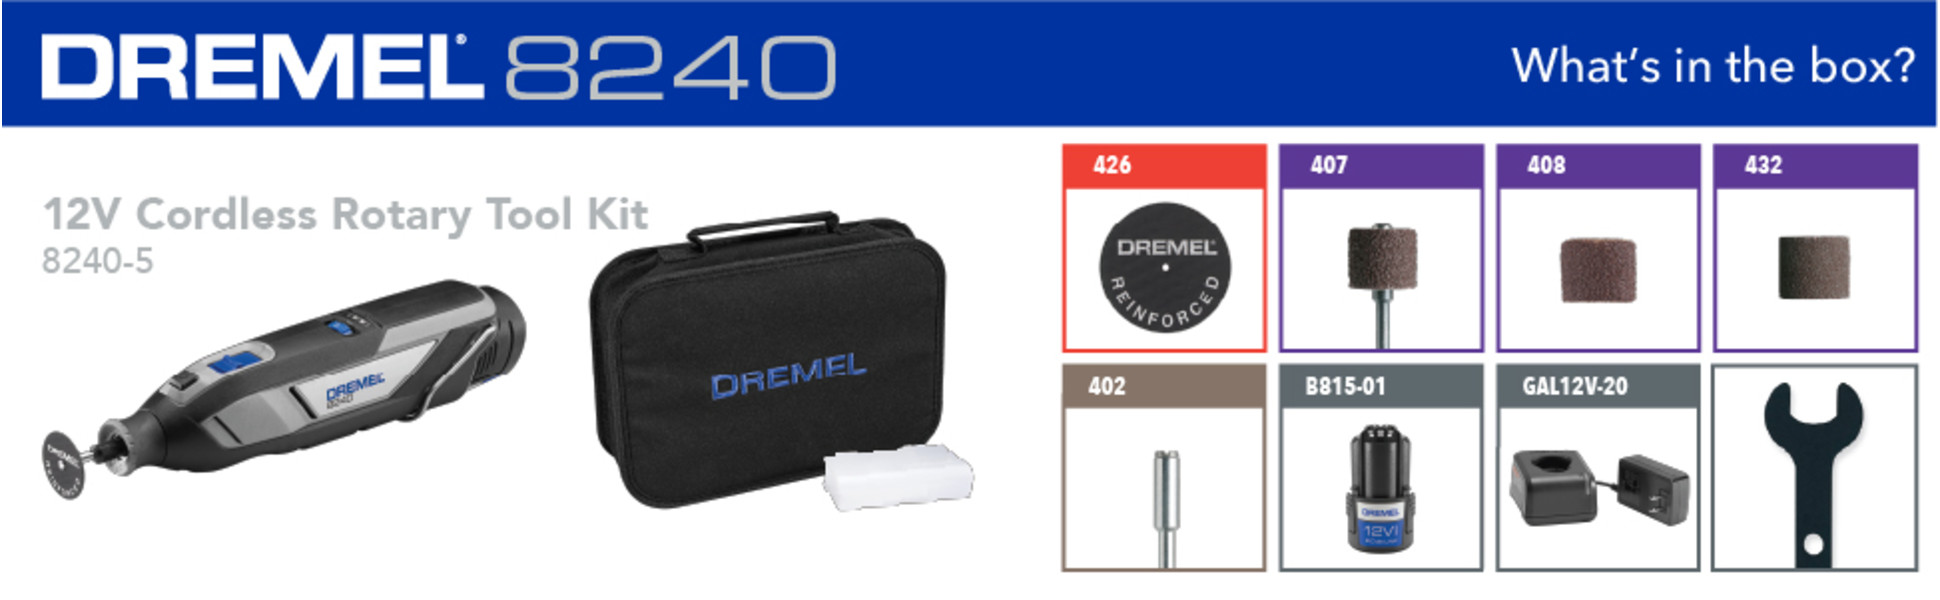 Dremel B815-01 12V Max 2AH Lithium-ion Battery Pack B815-01 - The Home Depot